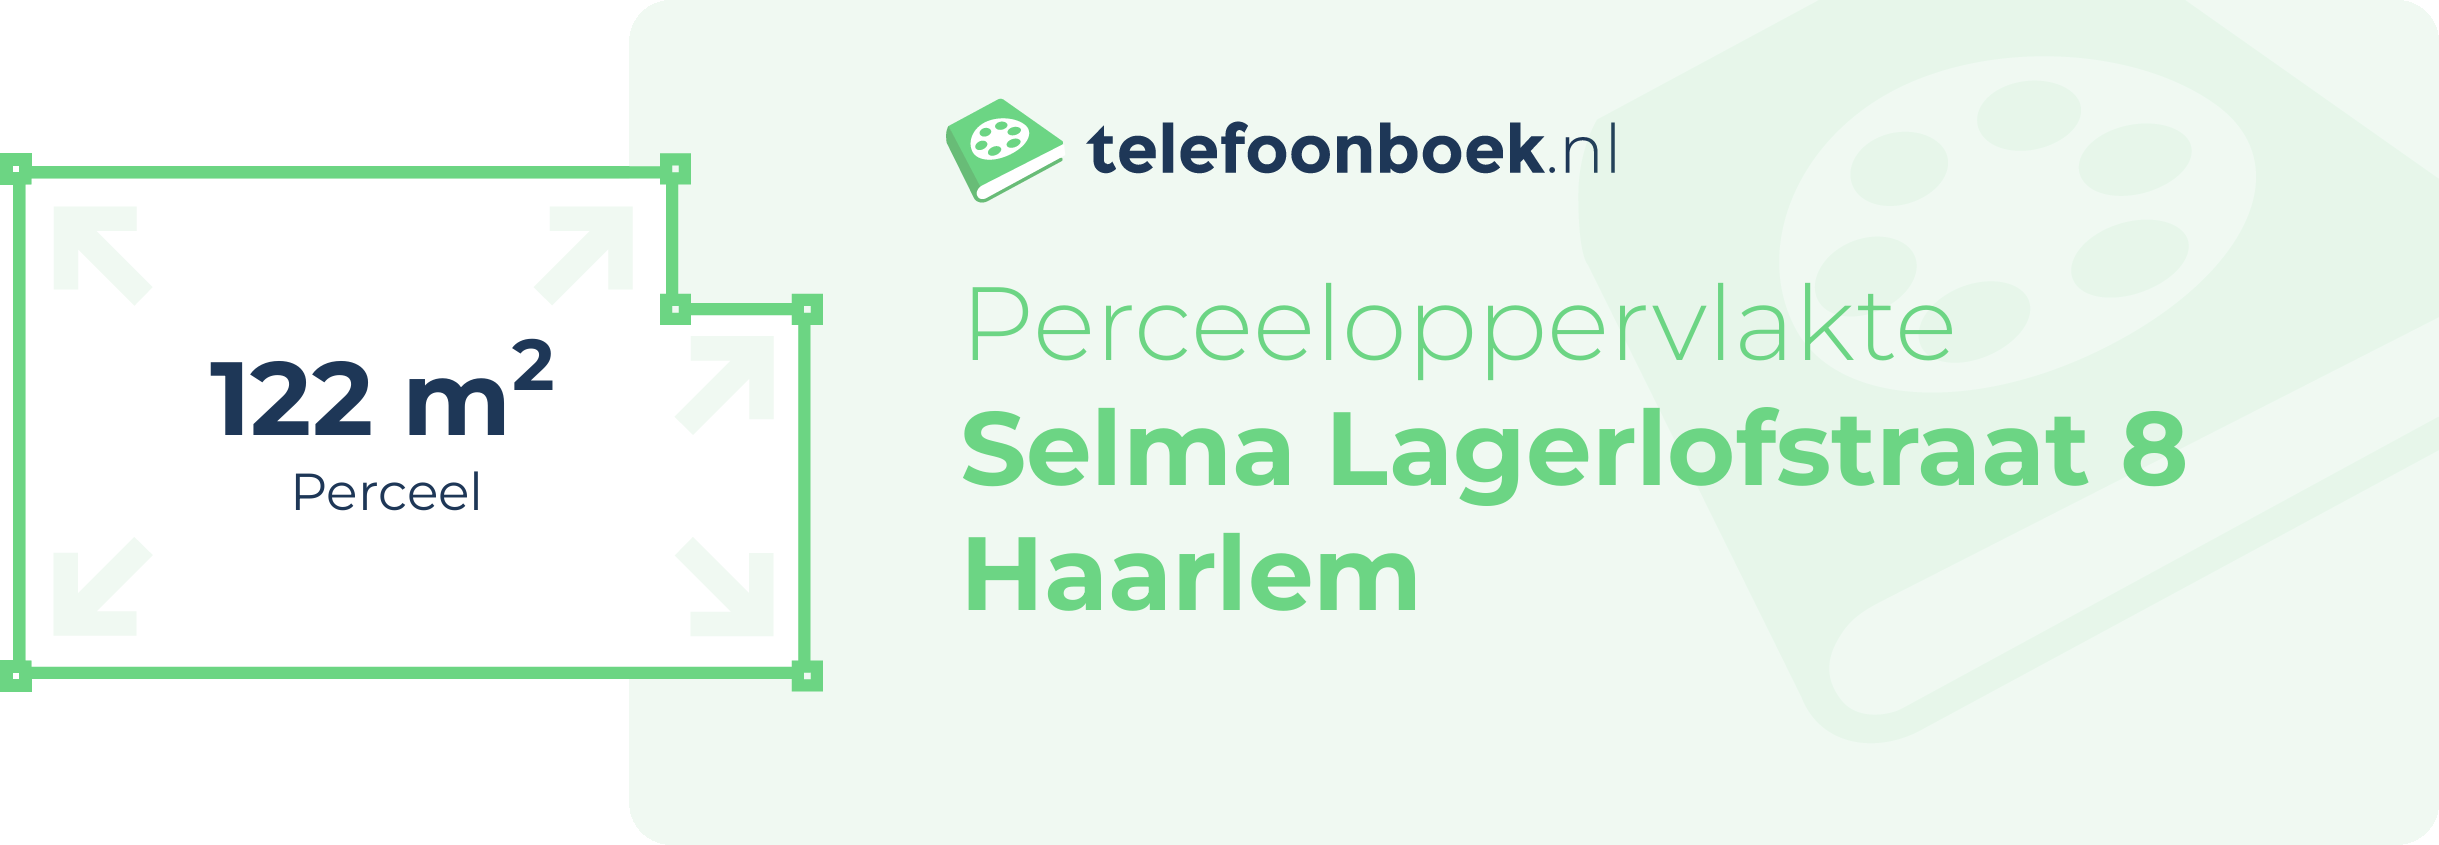 Perceeloppervlakte Selma Lagerlofstraat 8 Haarlem